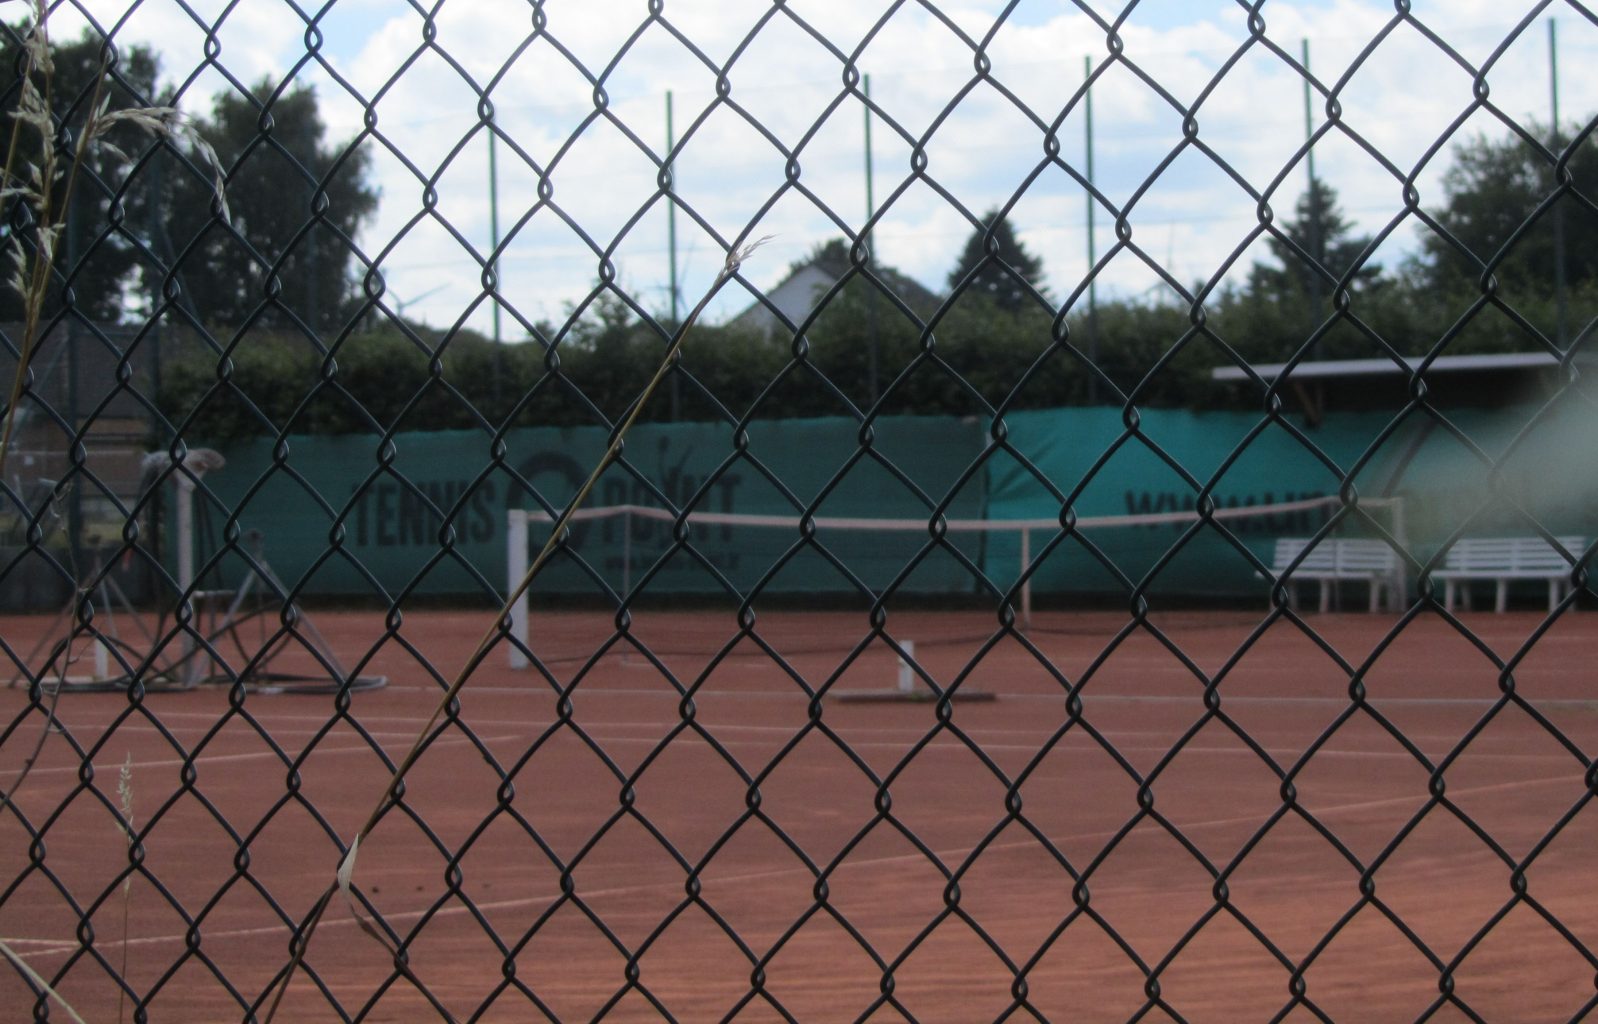 Tennisplatz Vossenack